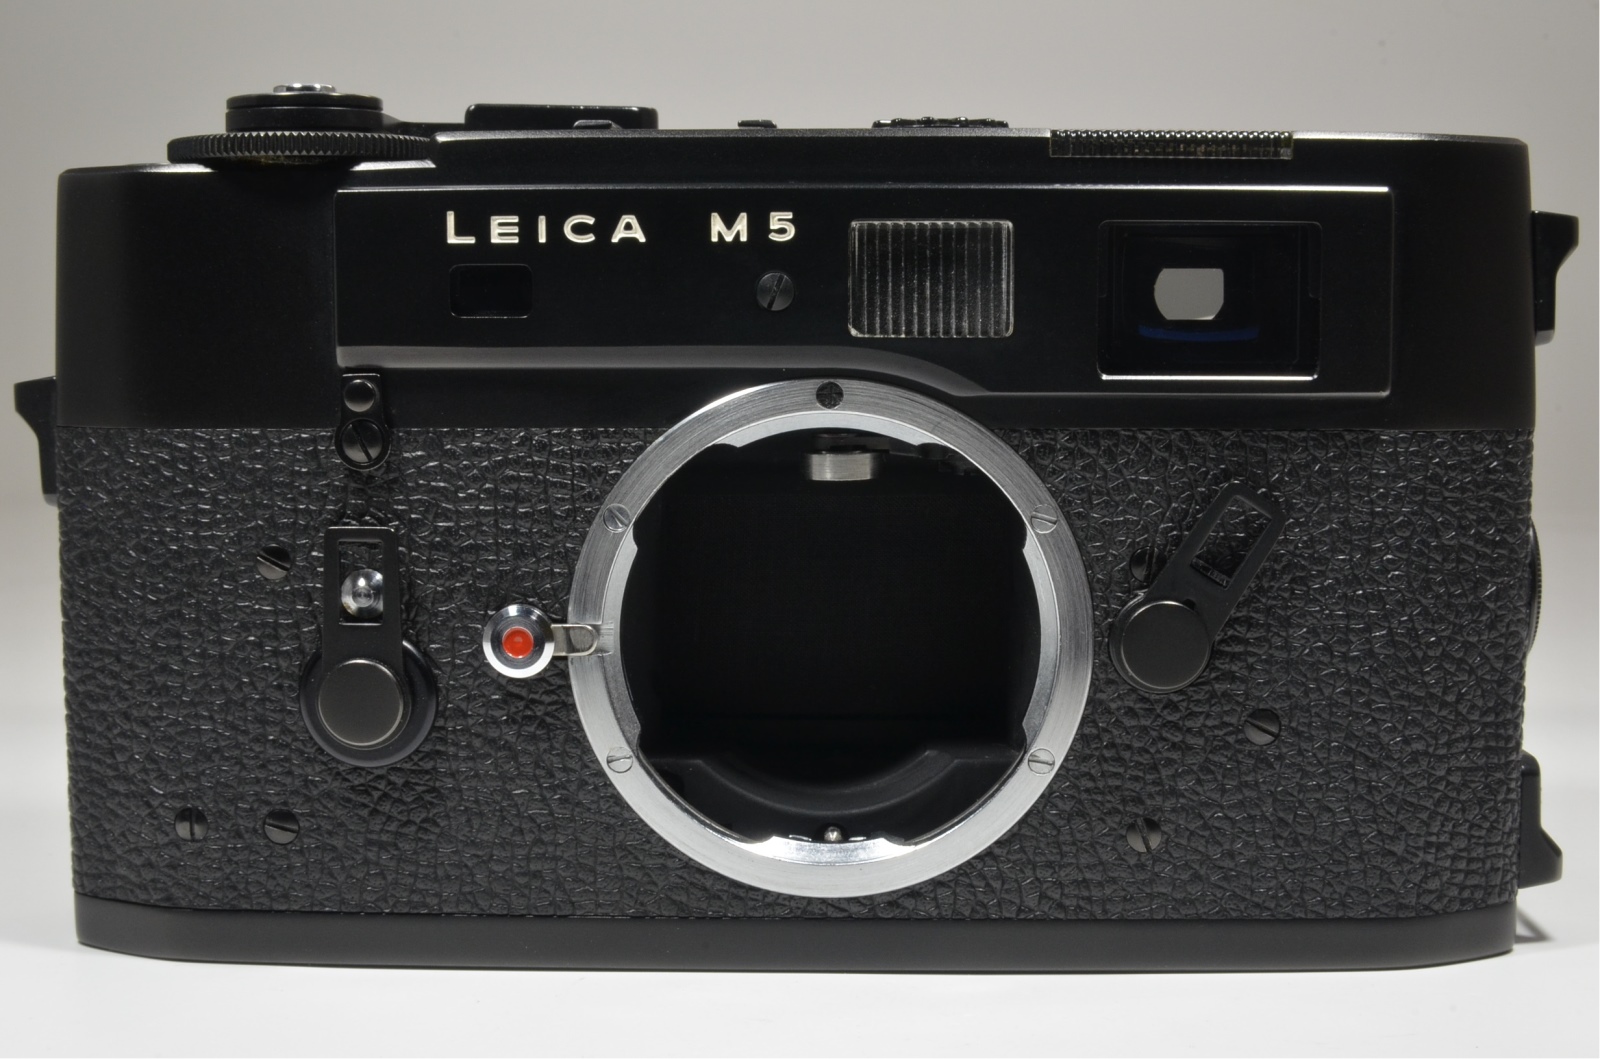 leica m5 black 3 lug year 1973 s/n 1377559 rangefinder camera